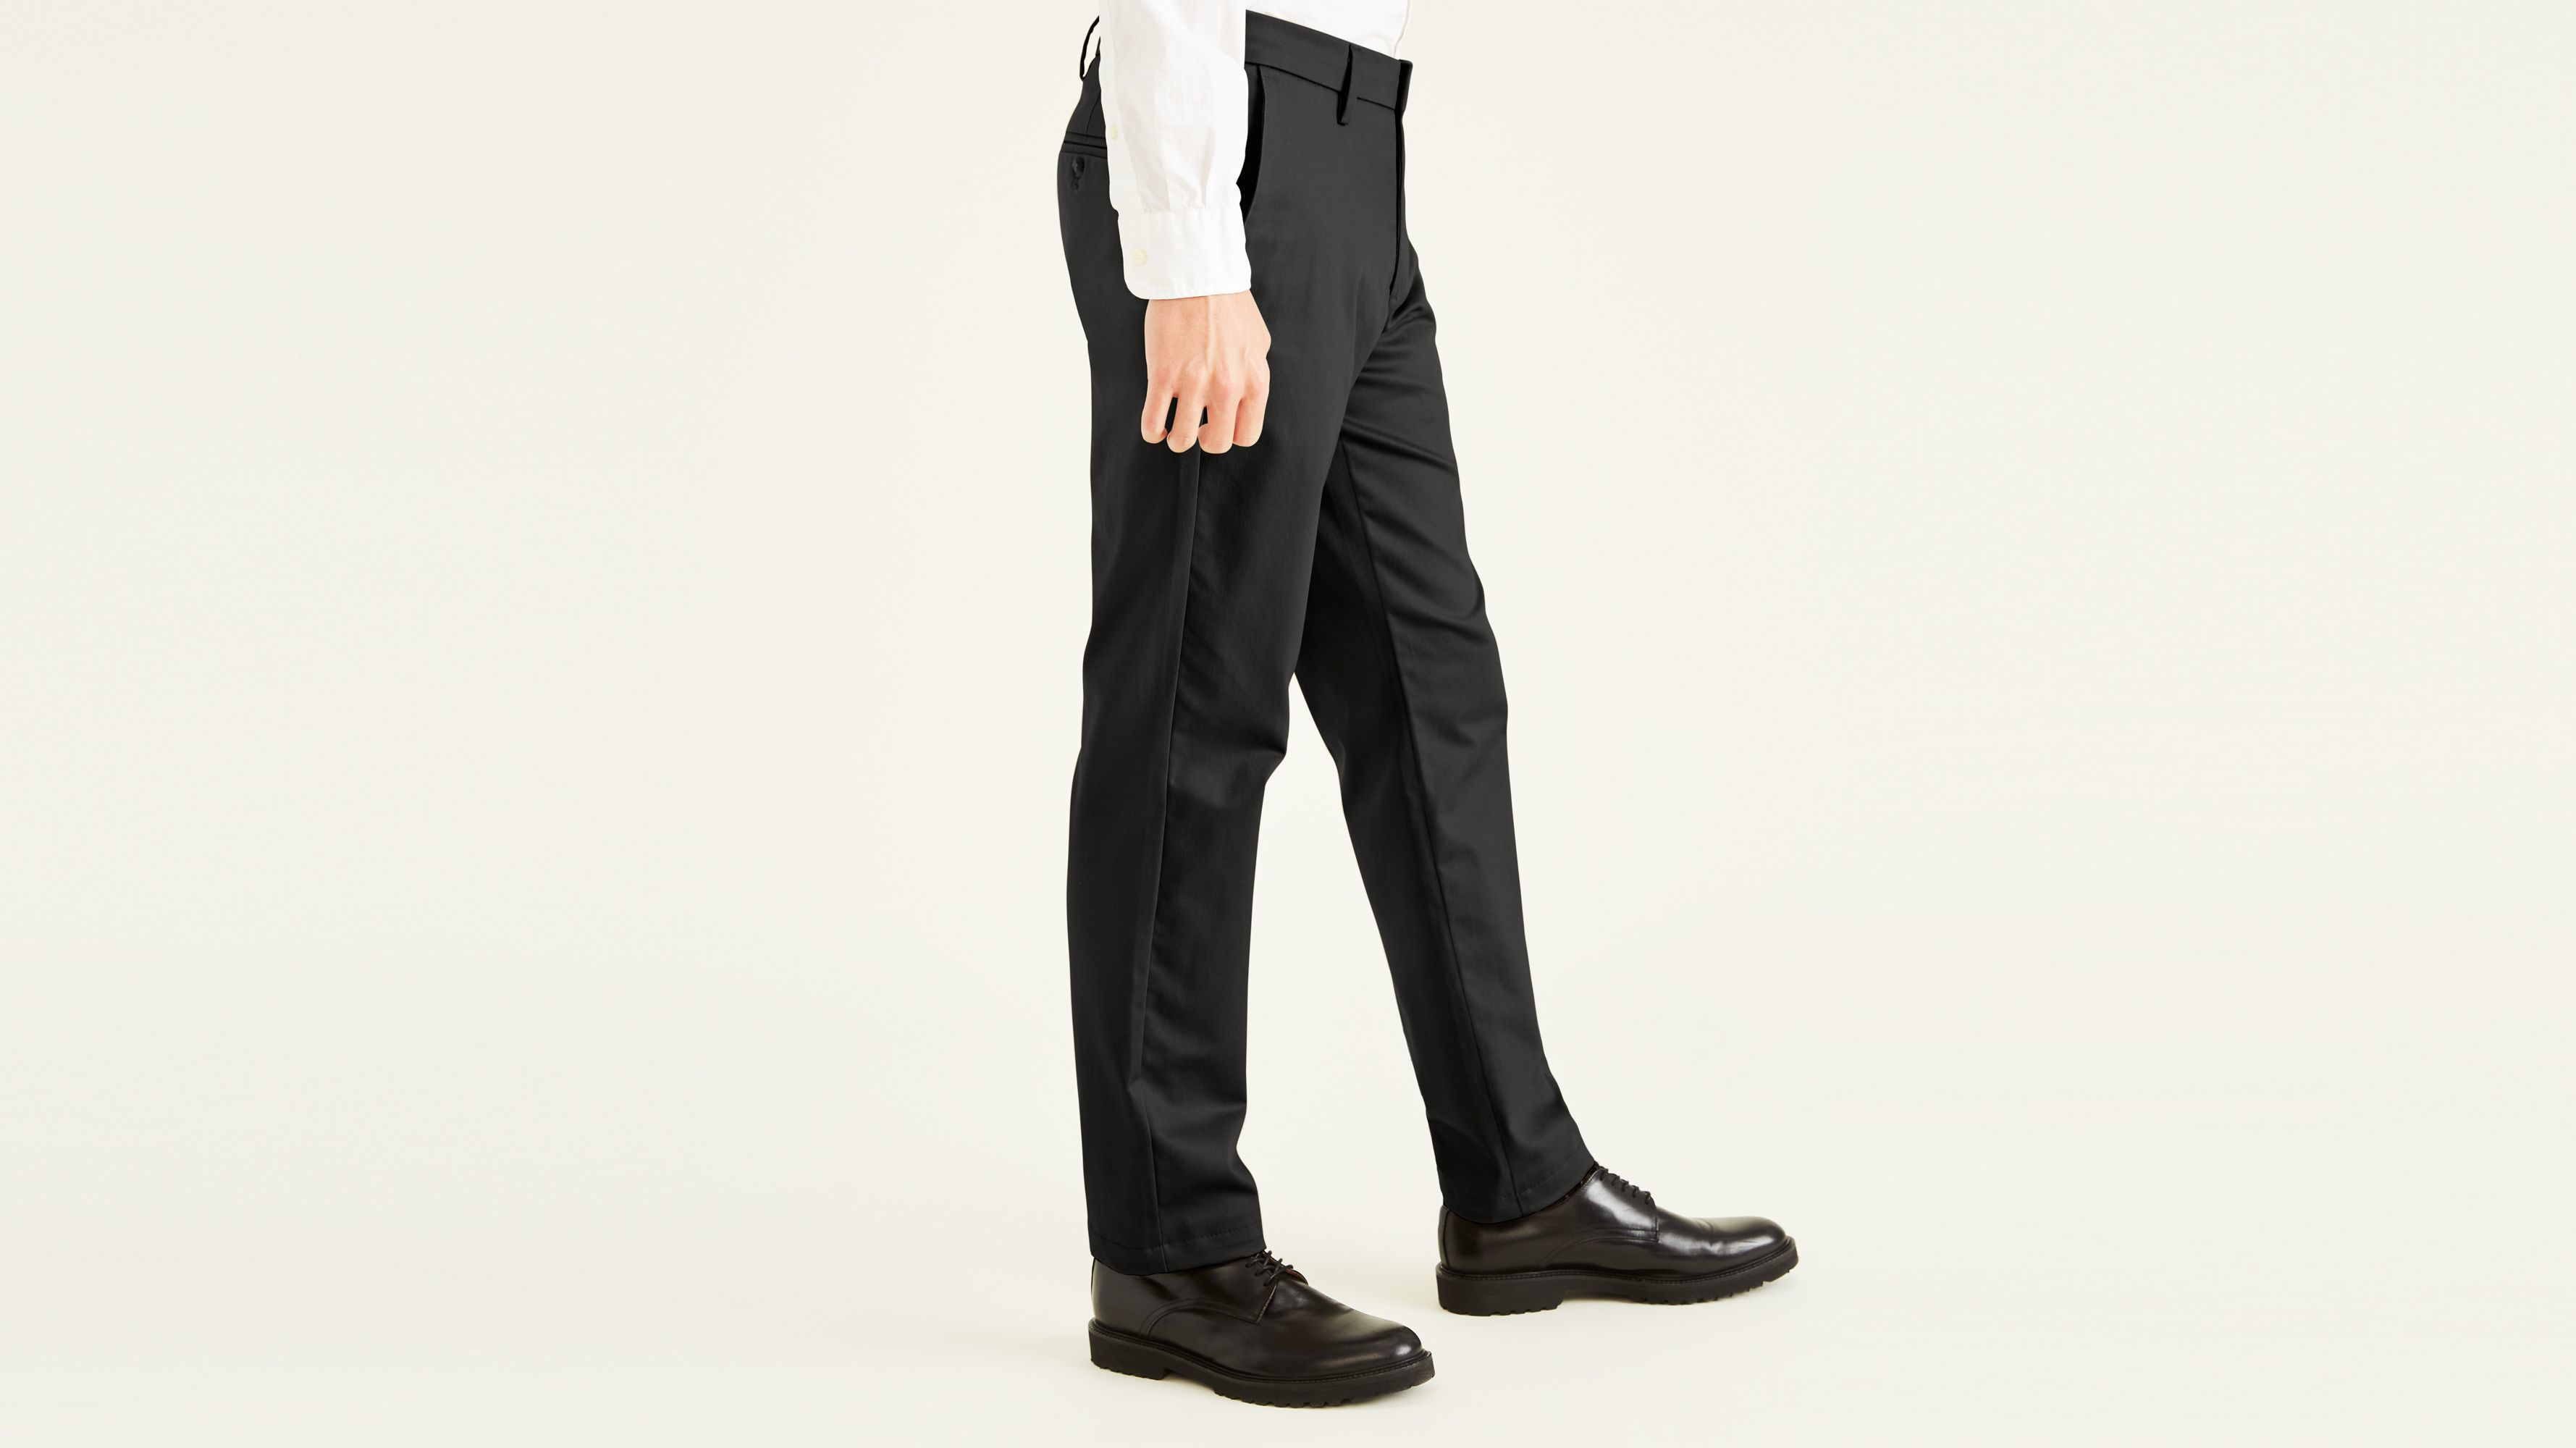 Dockers Solid Black Dress Pants Size 12 (Petite) - 67% off